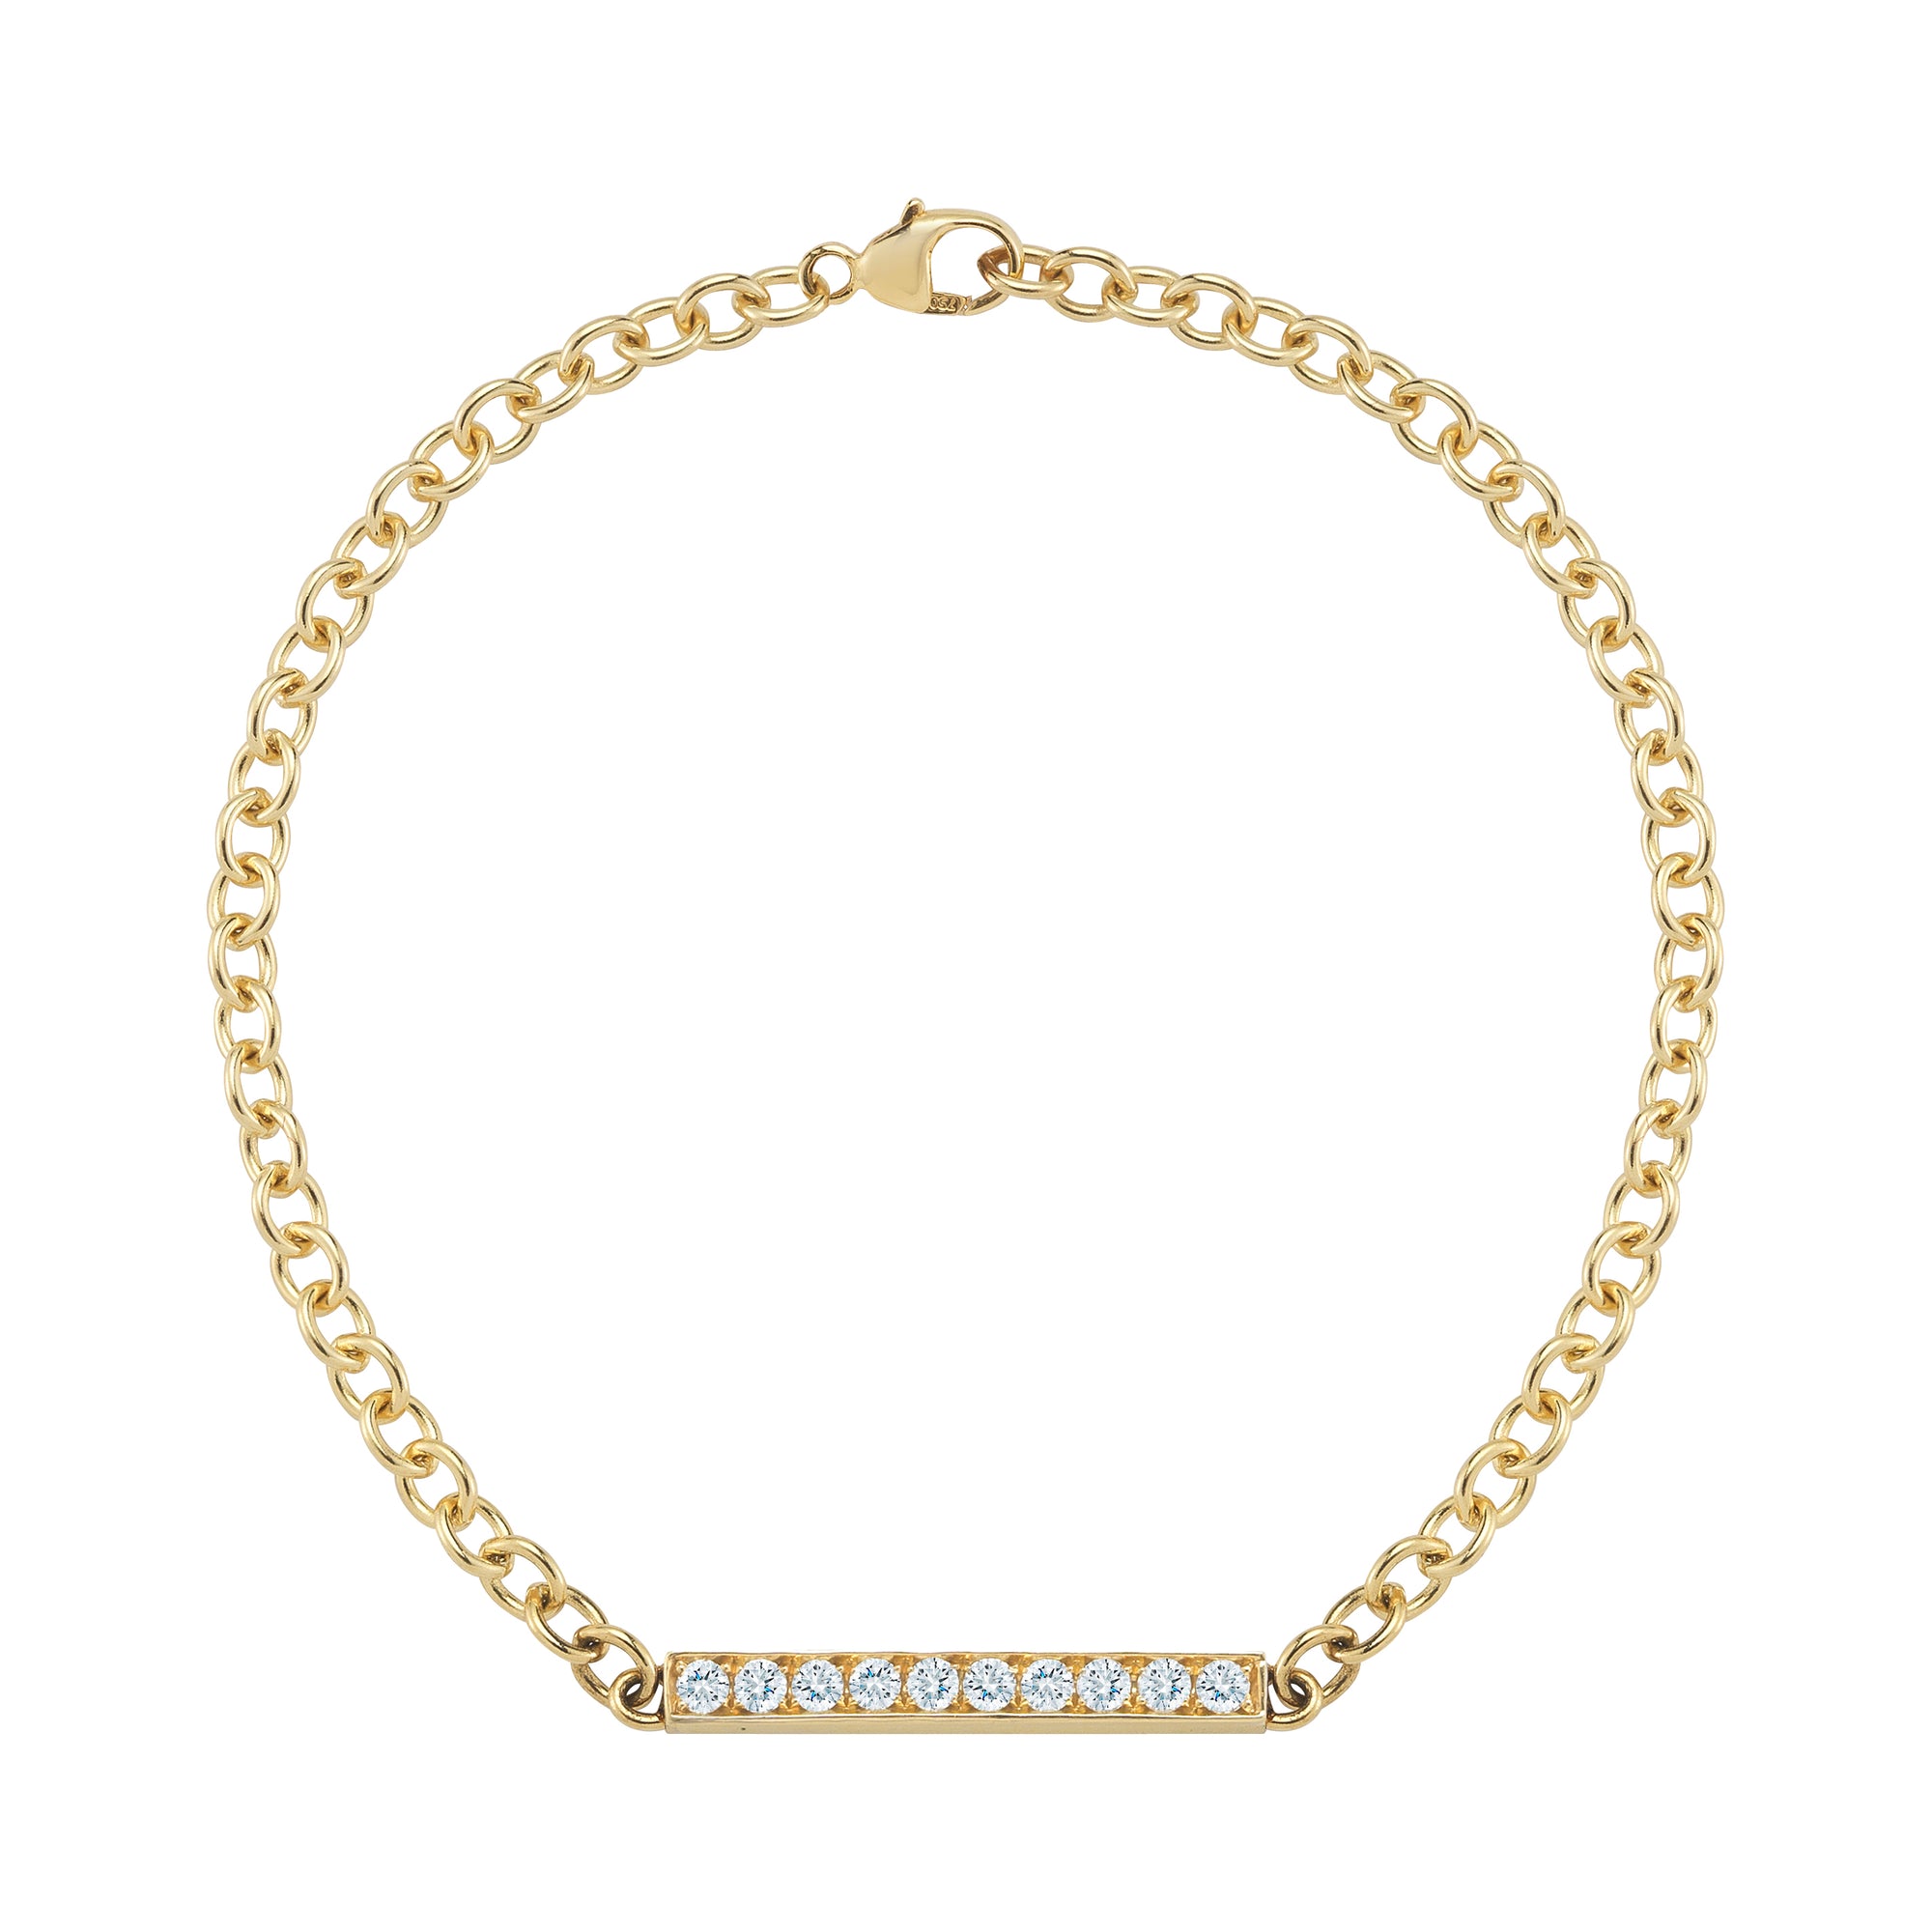 delicate 18k yellow gold diamond bar chain bracelet by finn by candice pool neistat